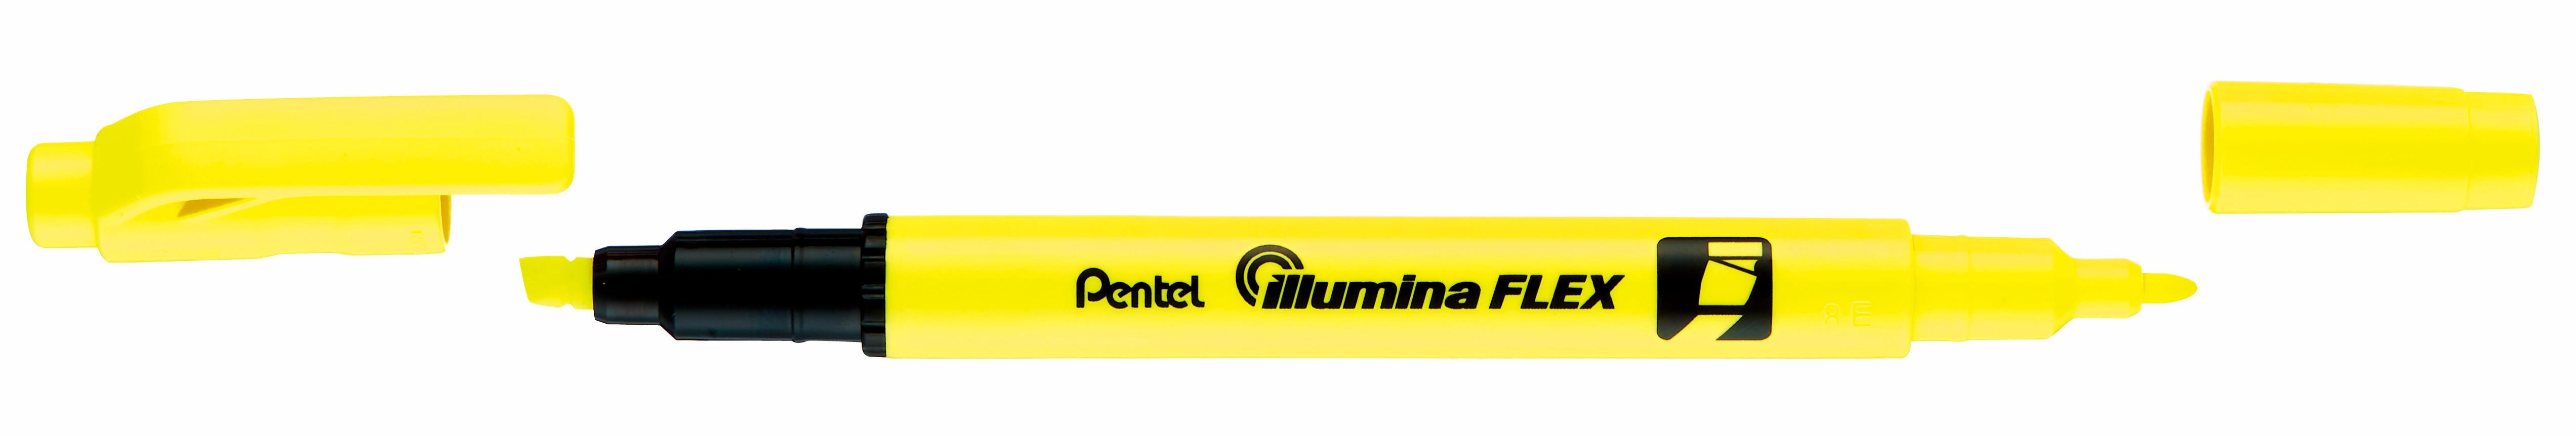 Pentel  Pentel Illumina Flex evidenziatore 1 pz Punta sottile/smussata Giallo 